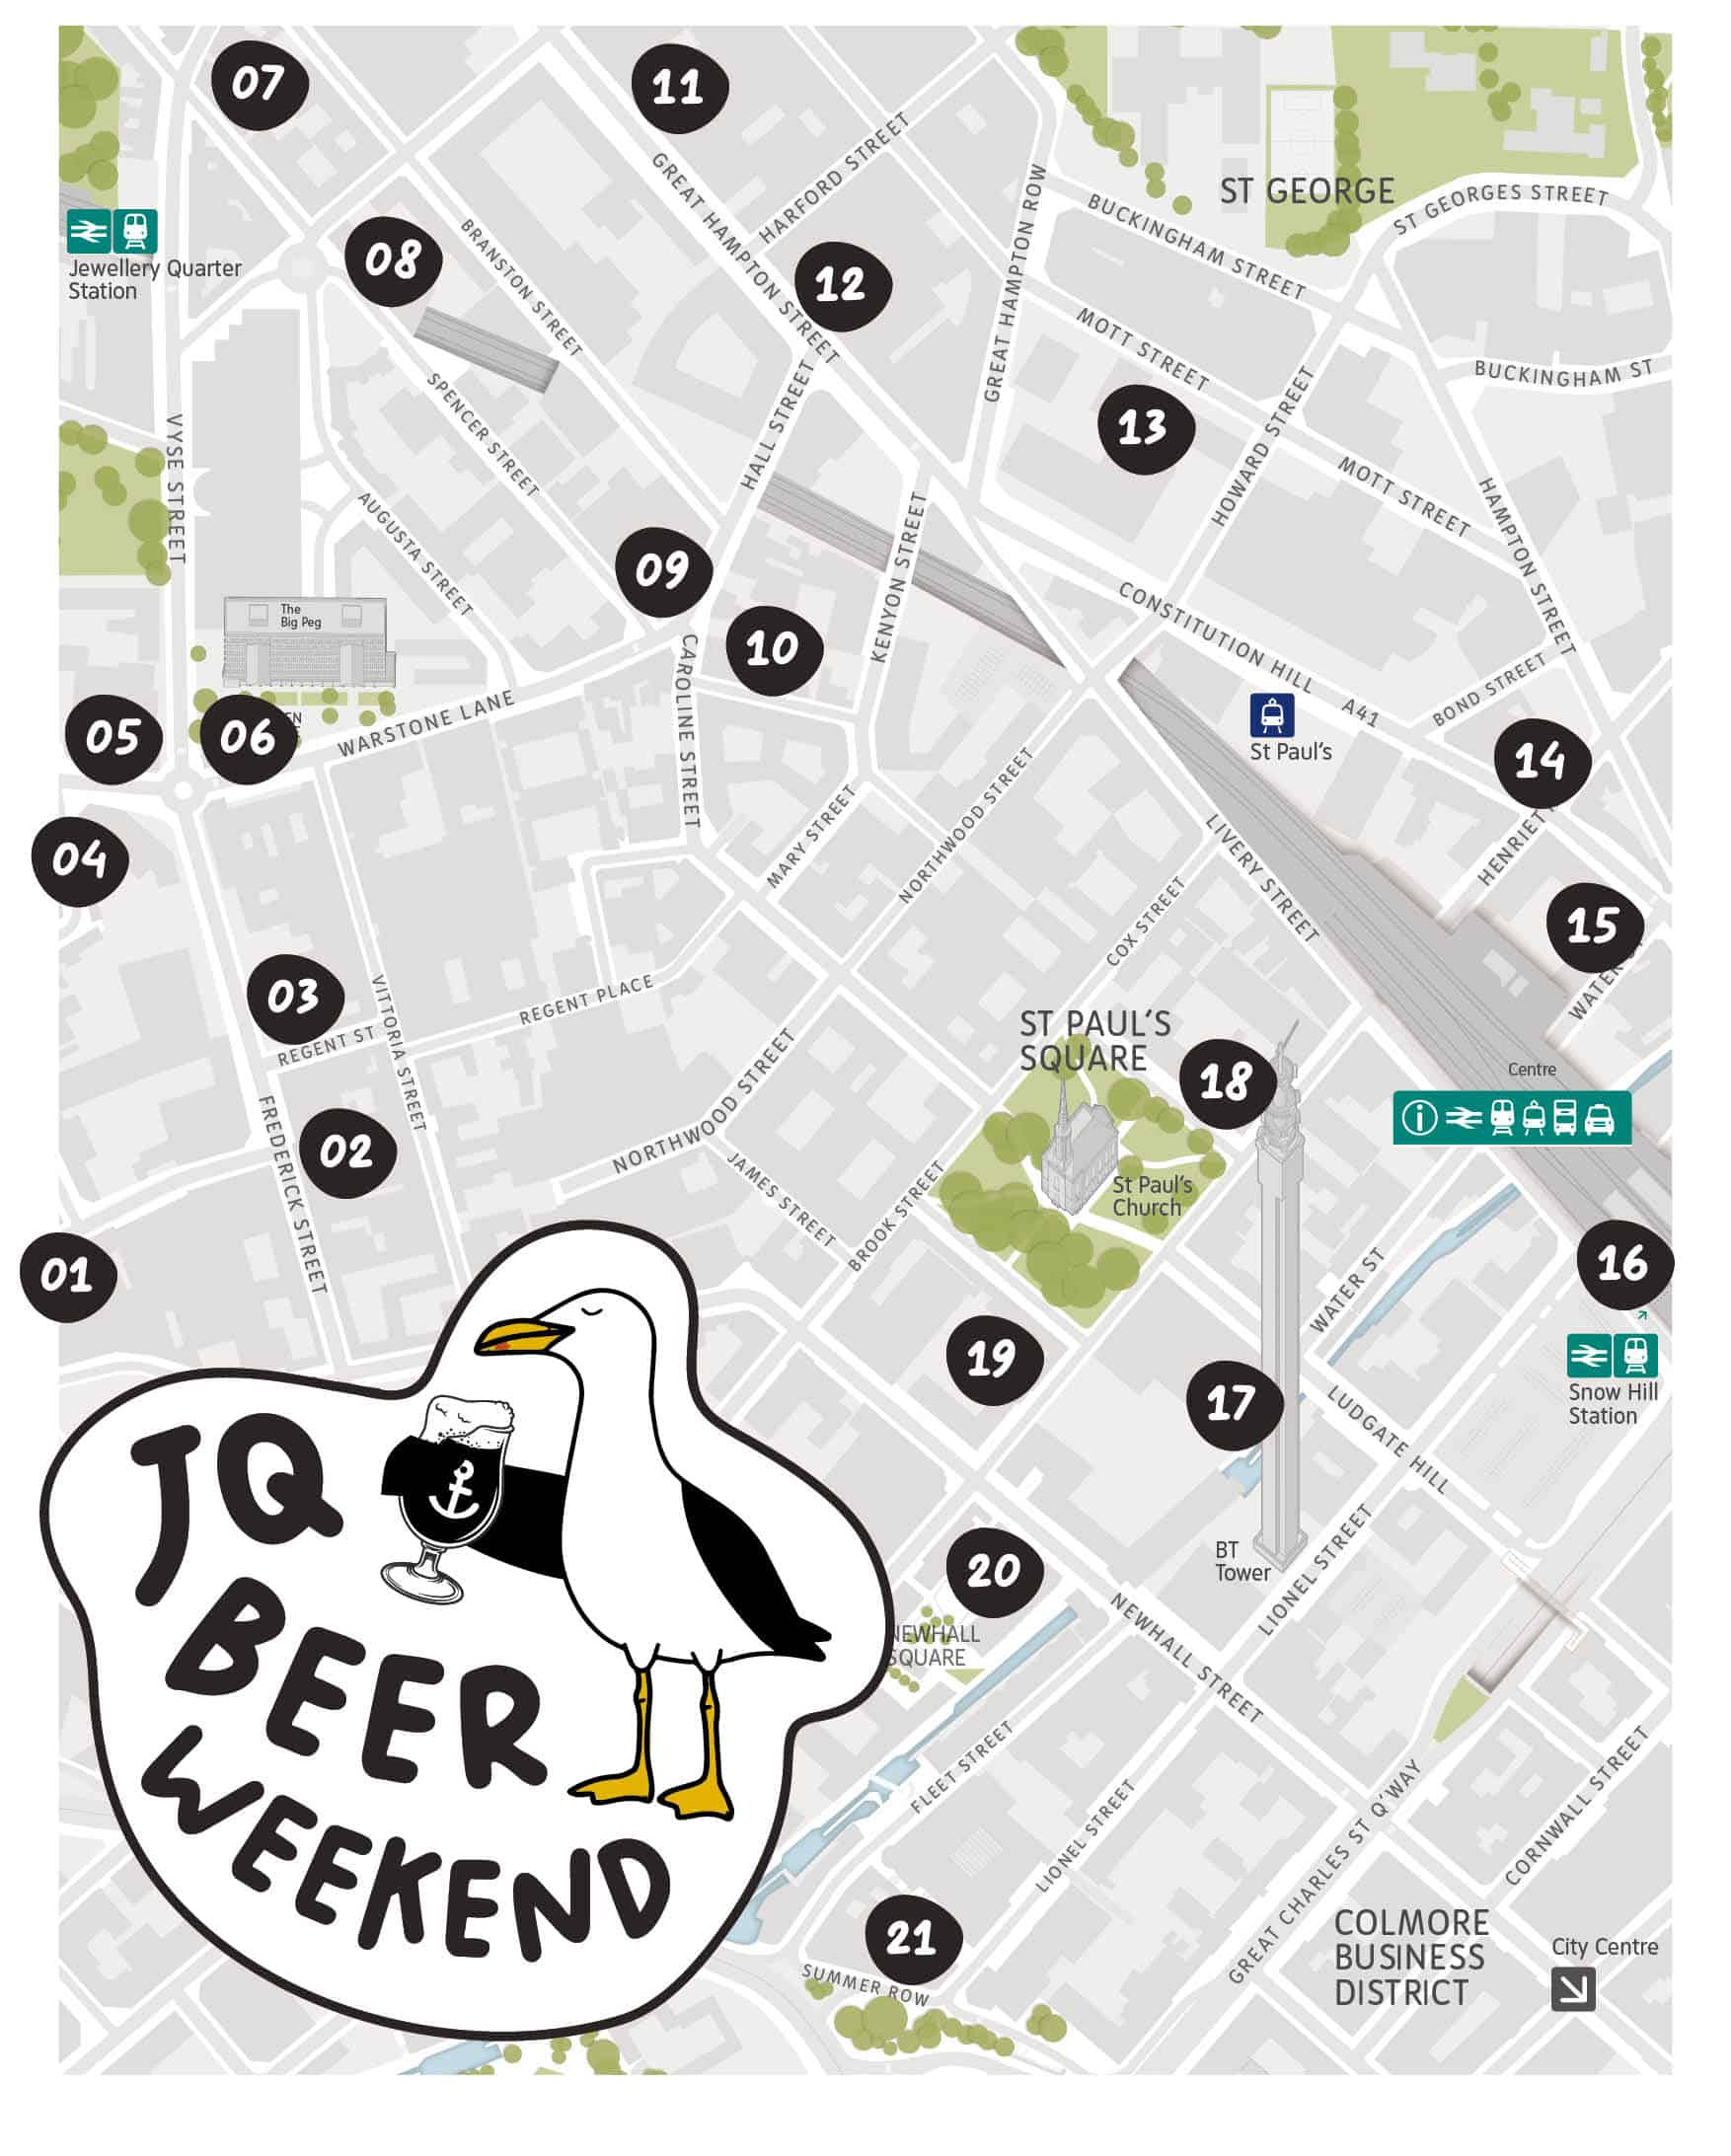 JQ-Beer-Weekend-Map-v2